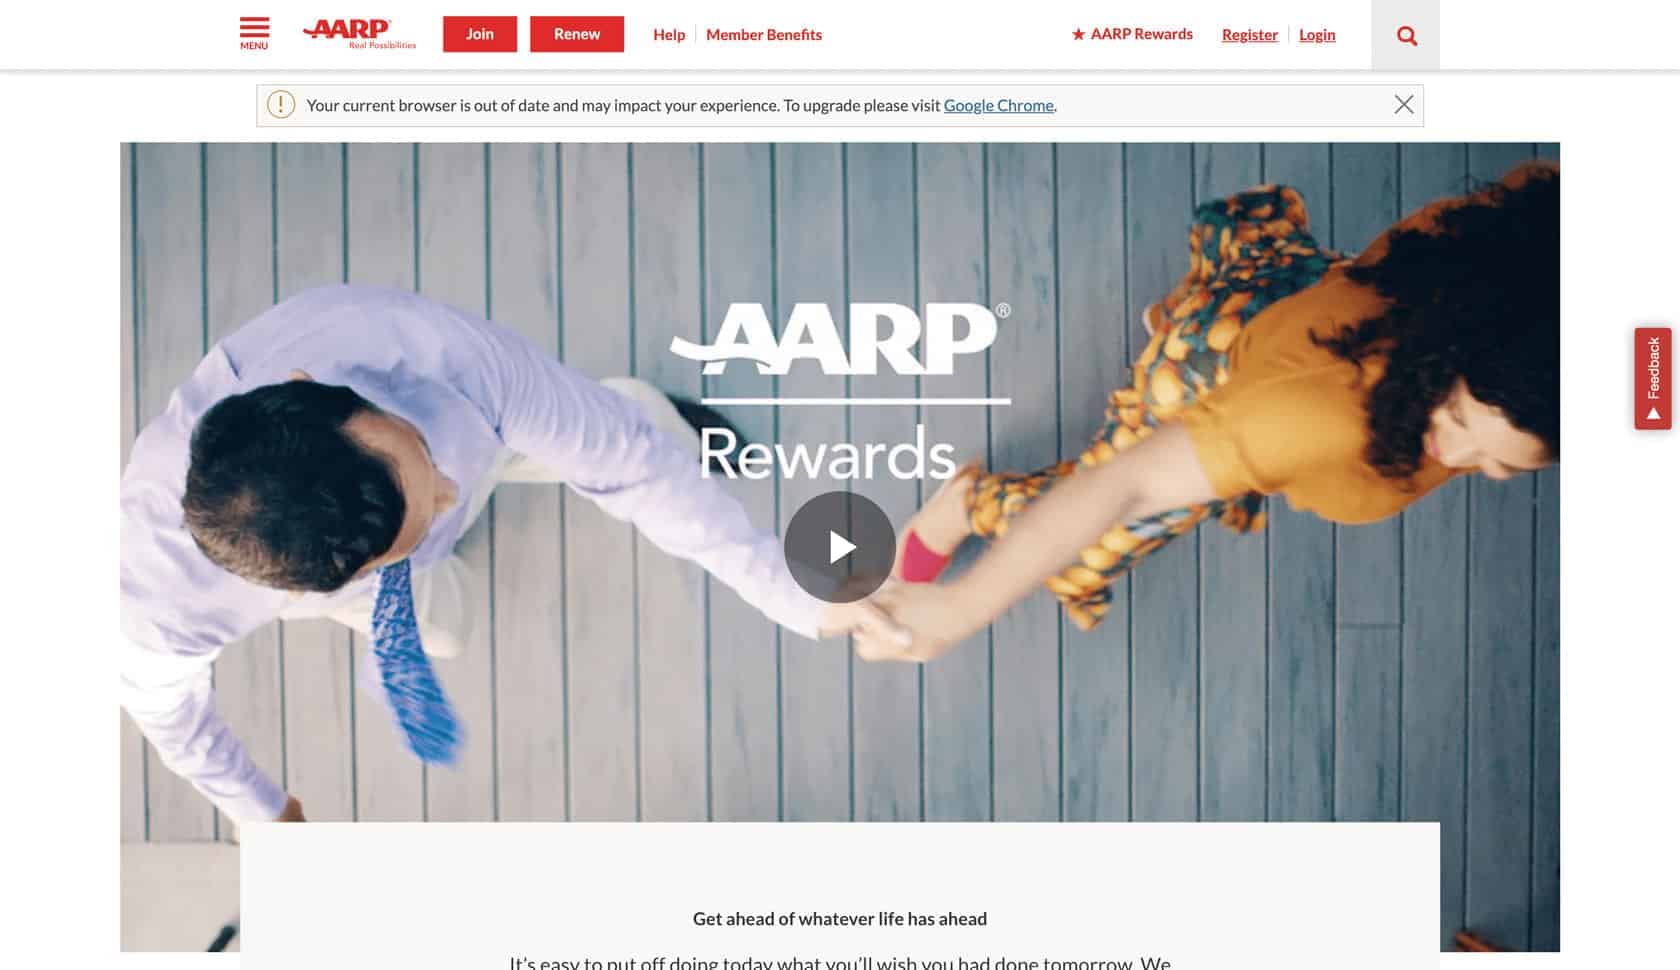 AARP.ORG - Official Website of AARP Rewards for Good